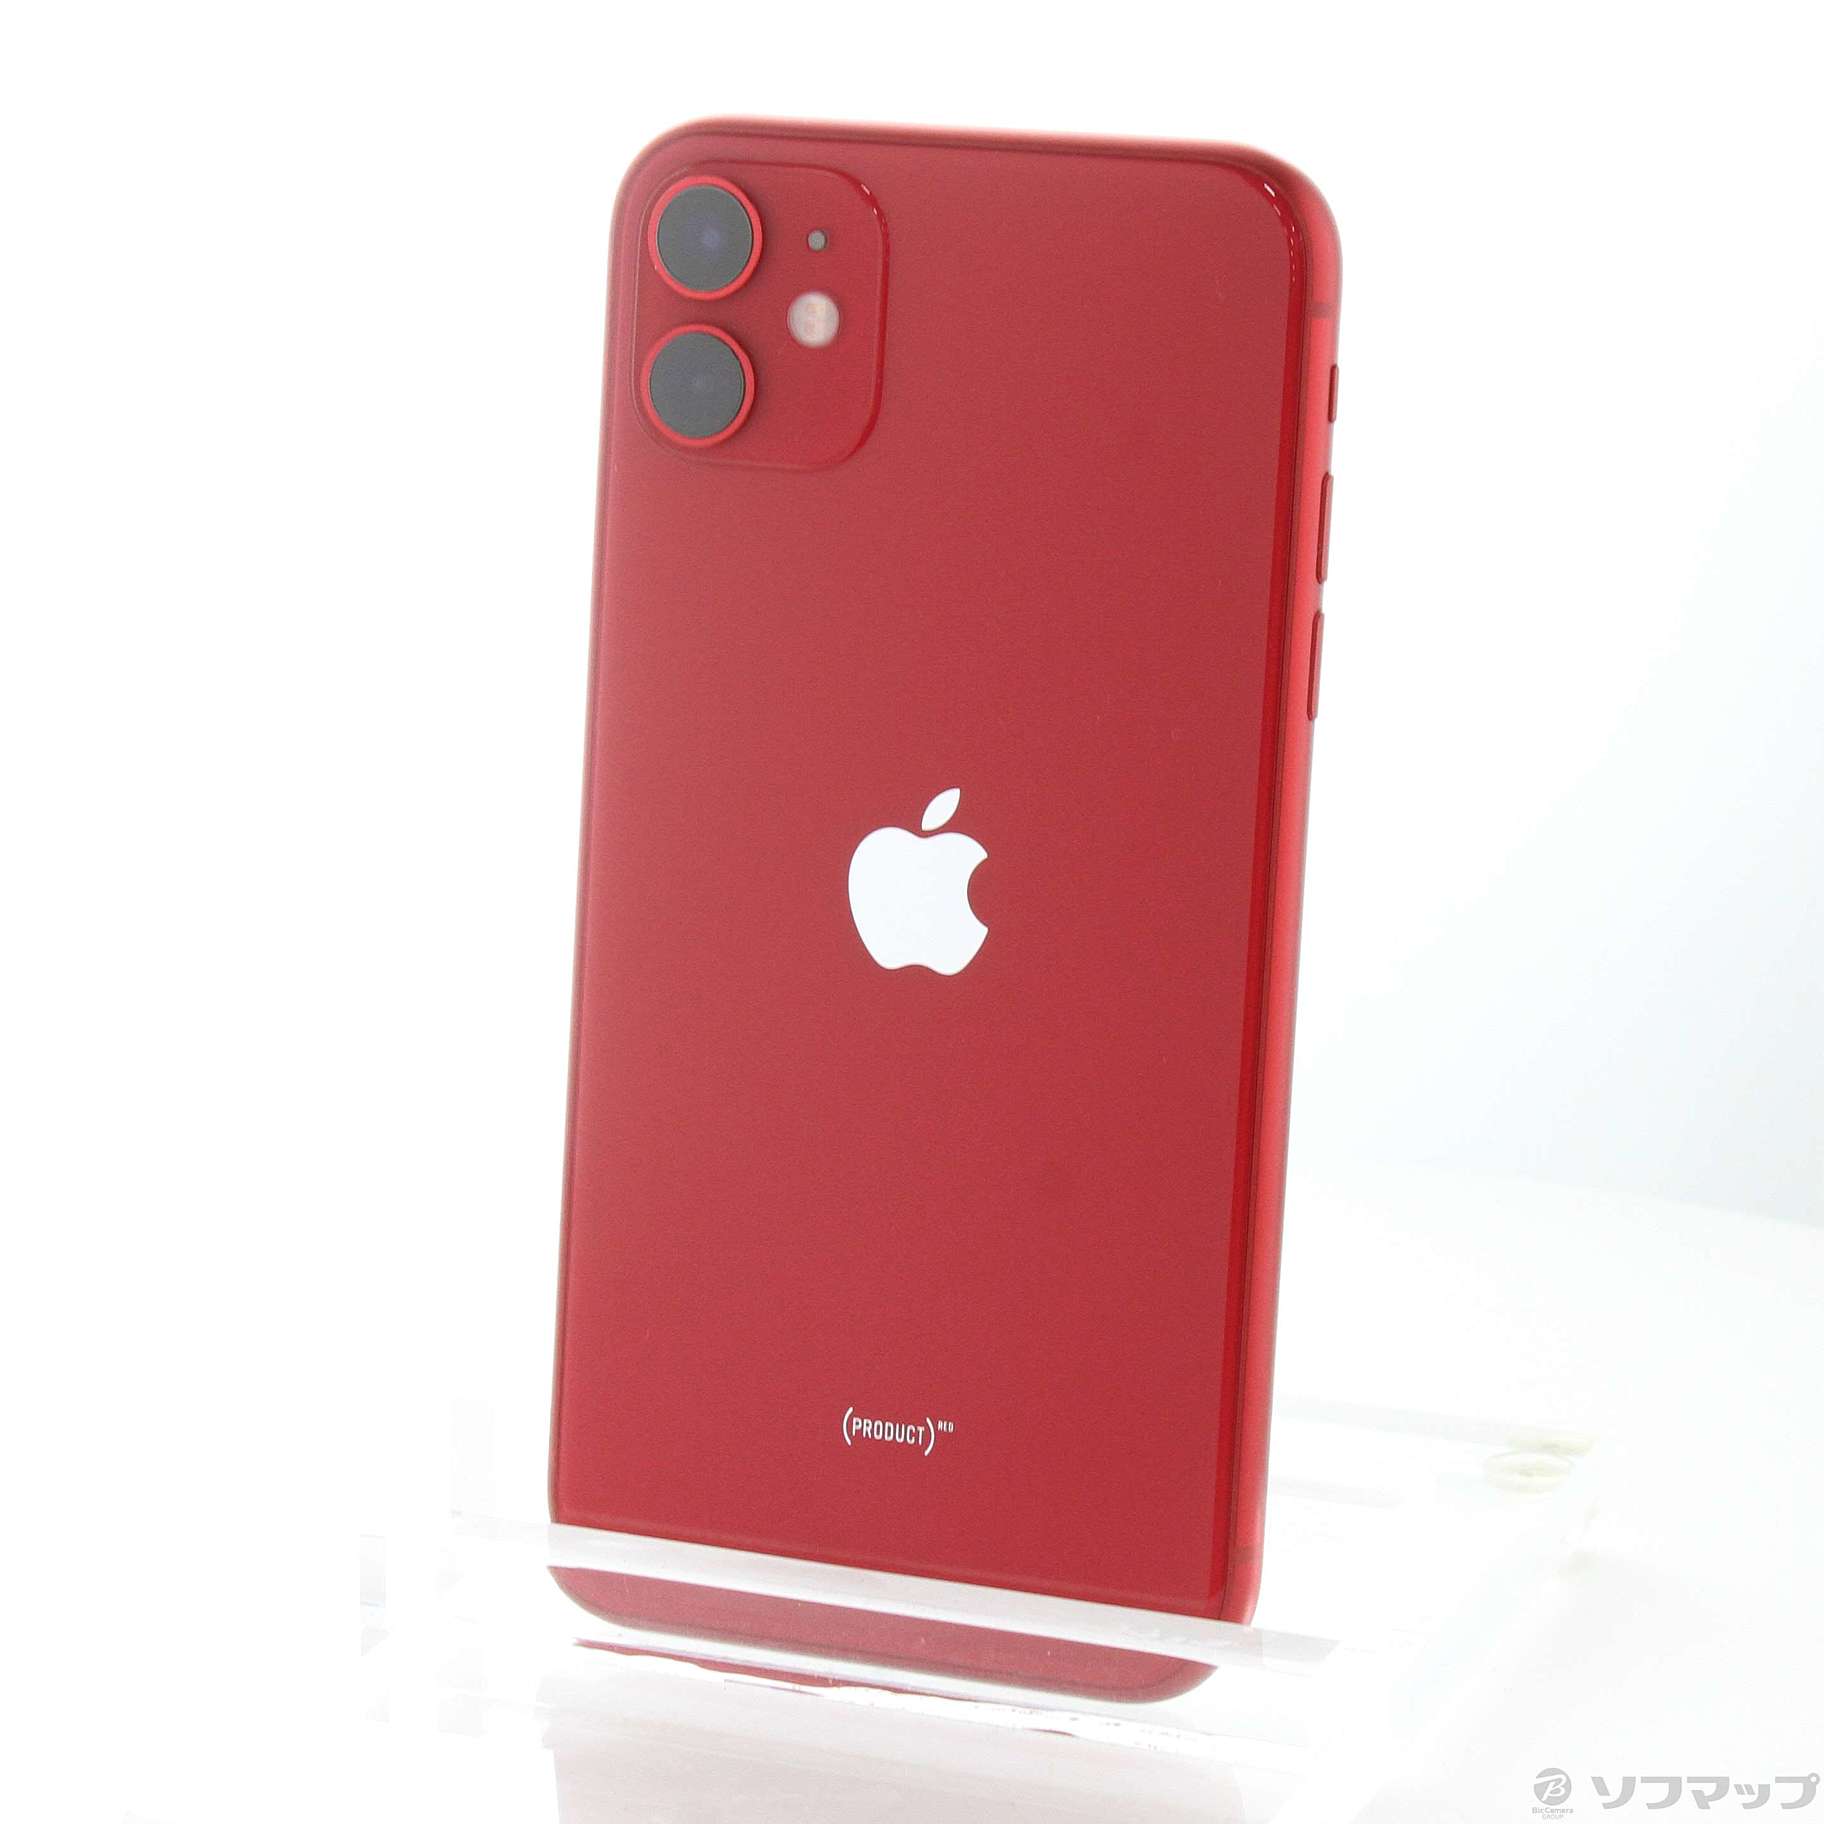 iPhone 11 128GB RED  専用